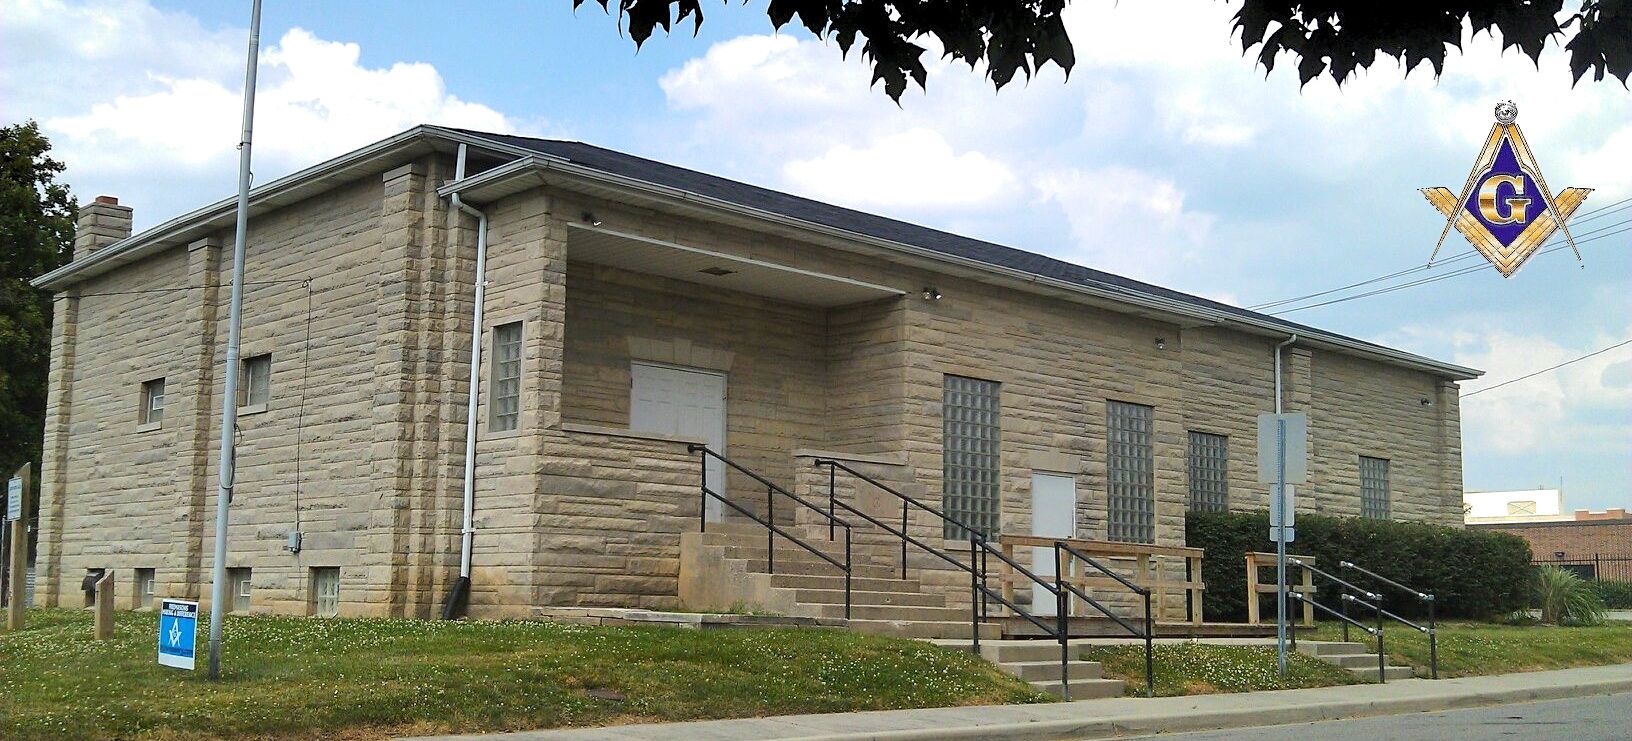 Carmel 421 Masonic Lodge, Carmel Indiana - Circa 2014